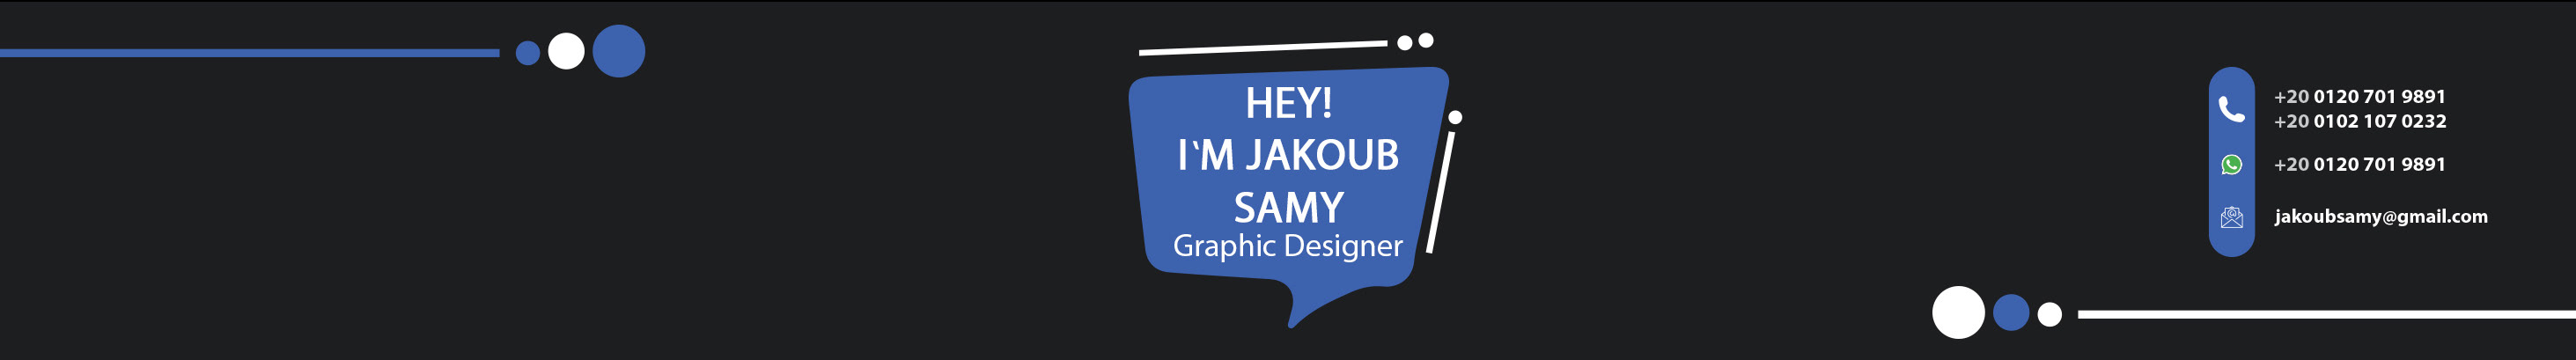 Banner de perfil de Jakoub Samy